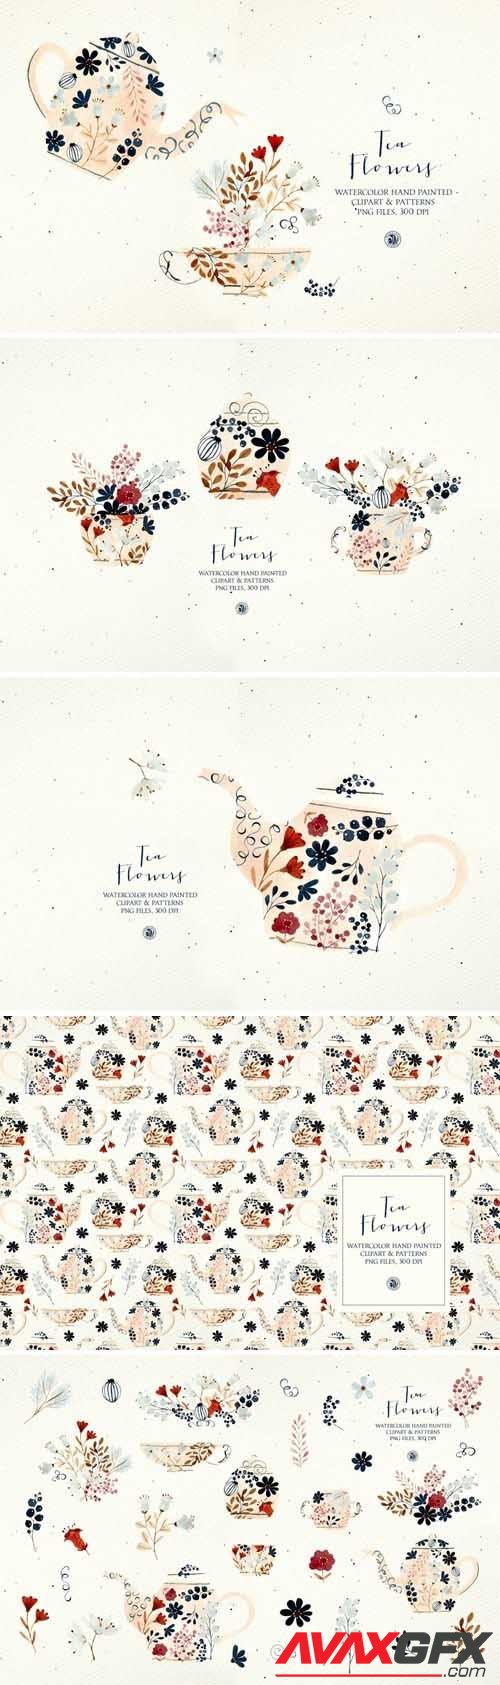 Tea Flowers - watercolor set - 5666021